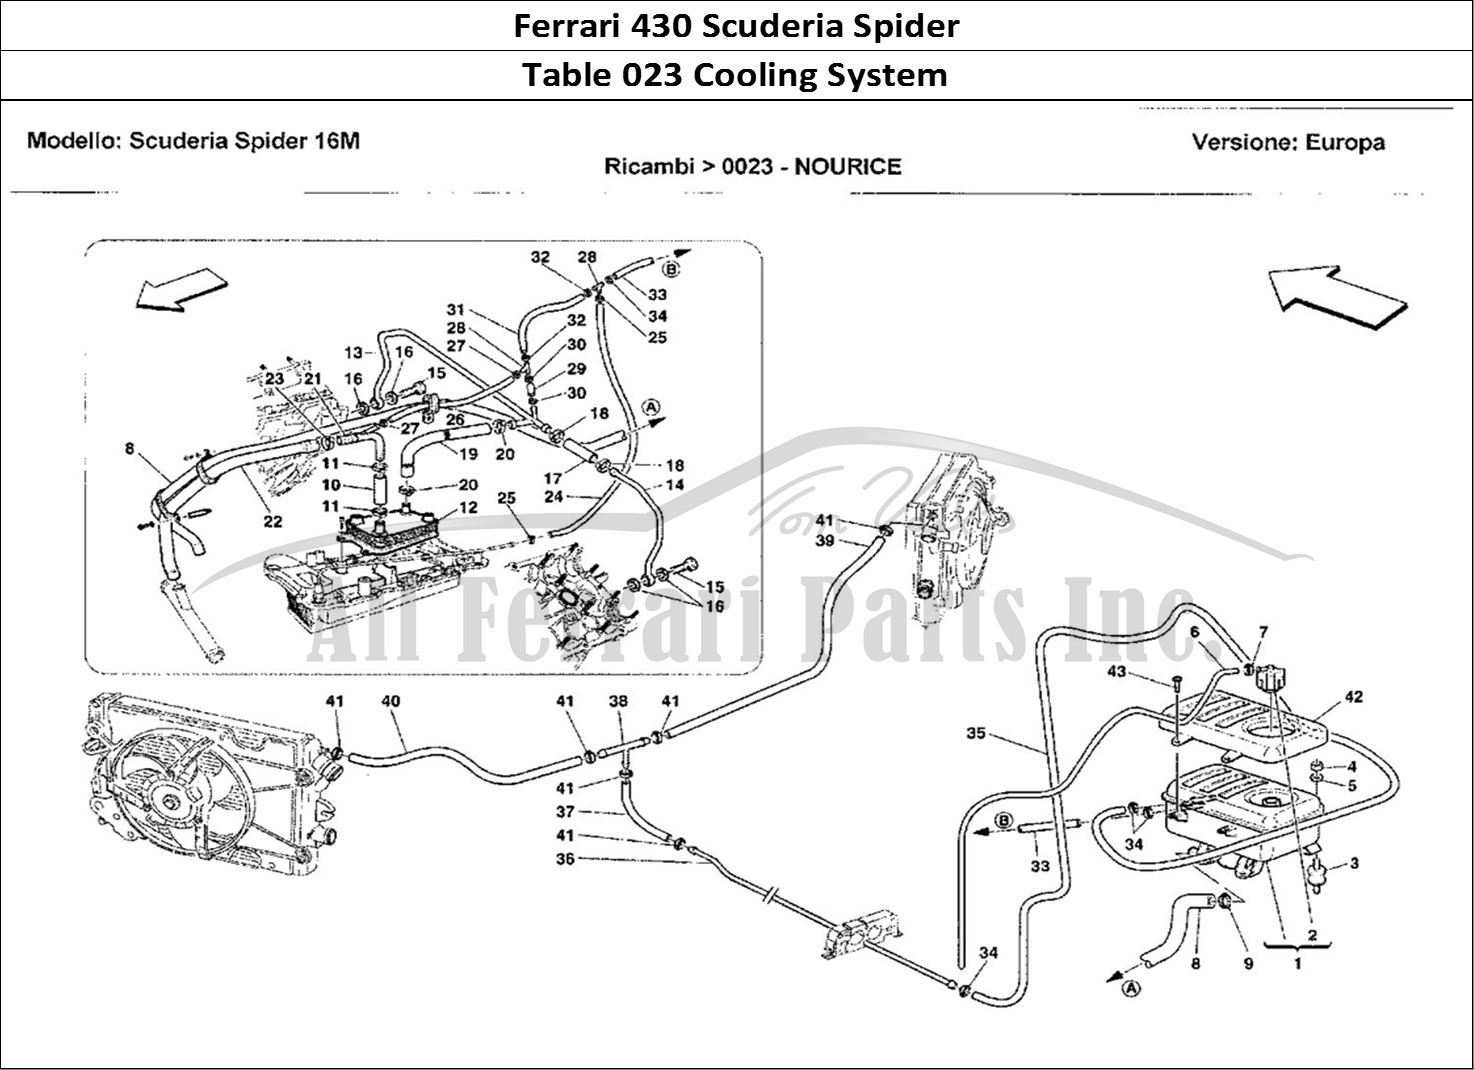 Ferrari Parts Ferrari 430 Scuderia Spider 16M Page 023 Nourice